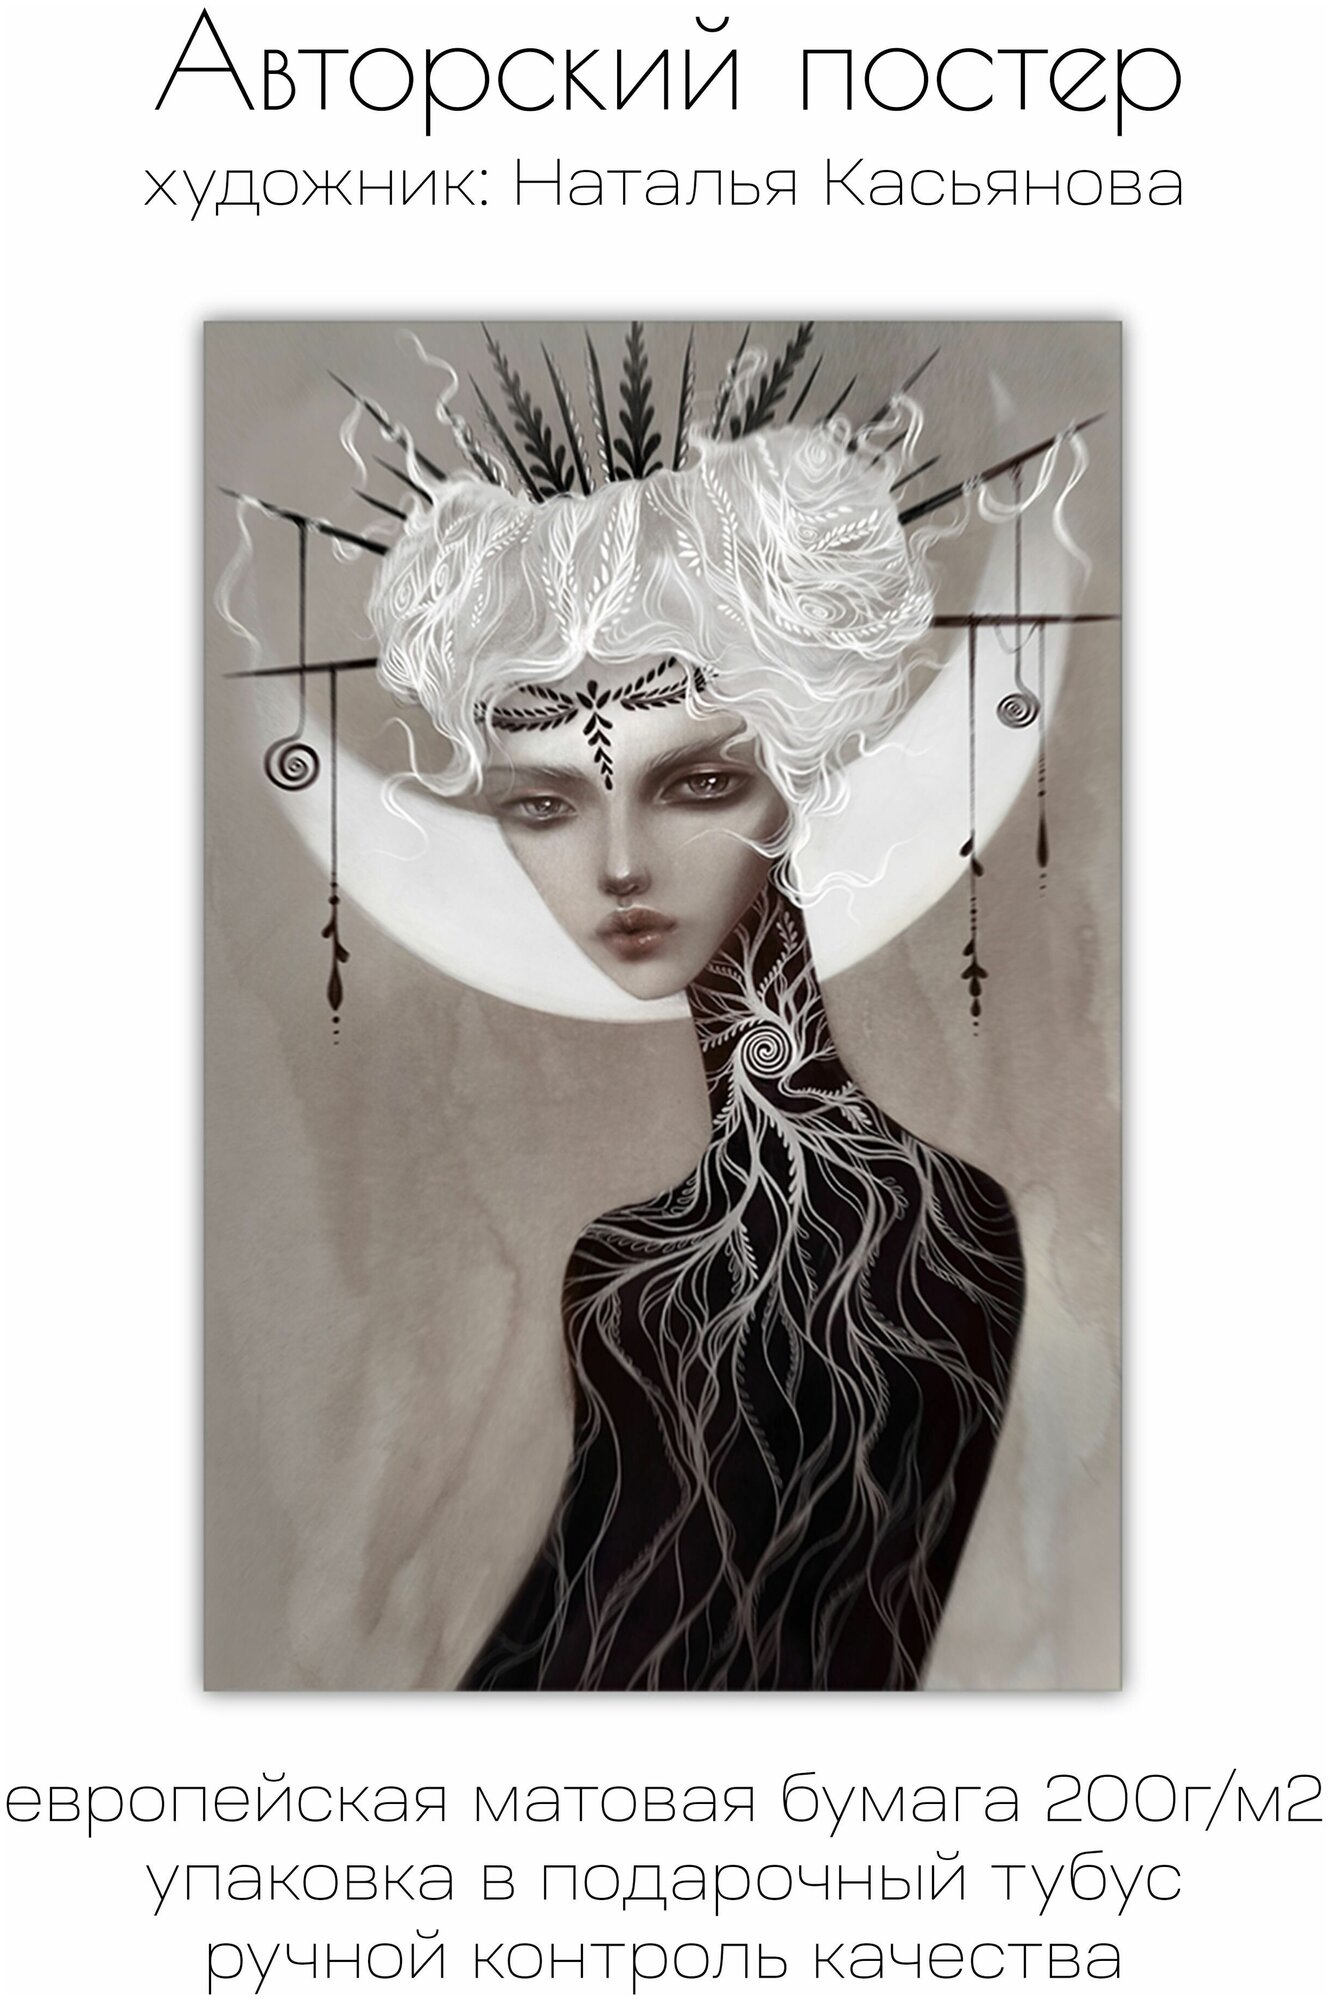 Интерьерный постер 50х70см "Moonlight", Наталья Касьянова от Gallery 5 Store